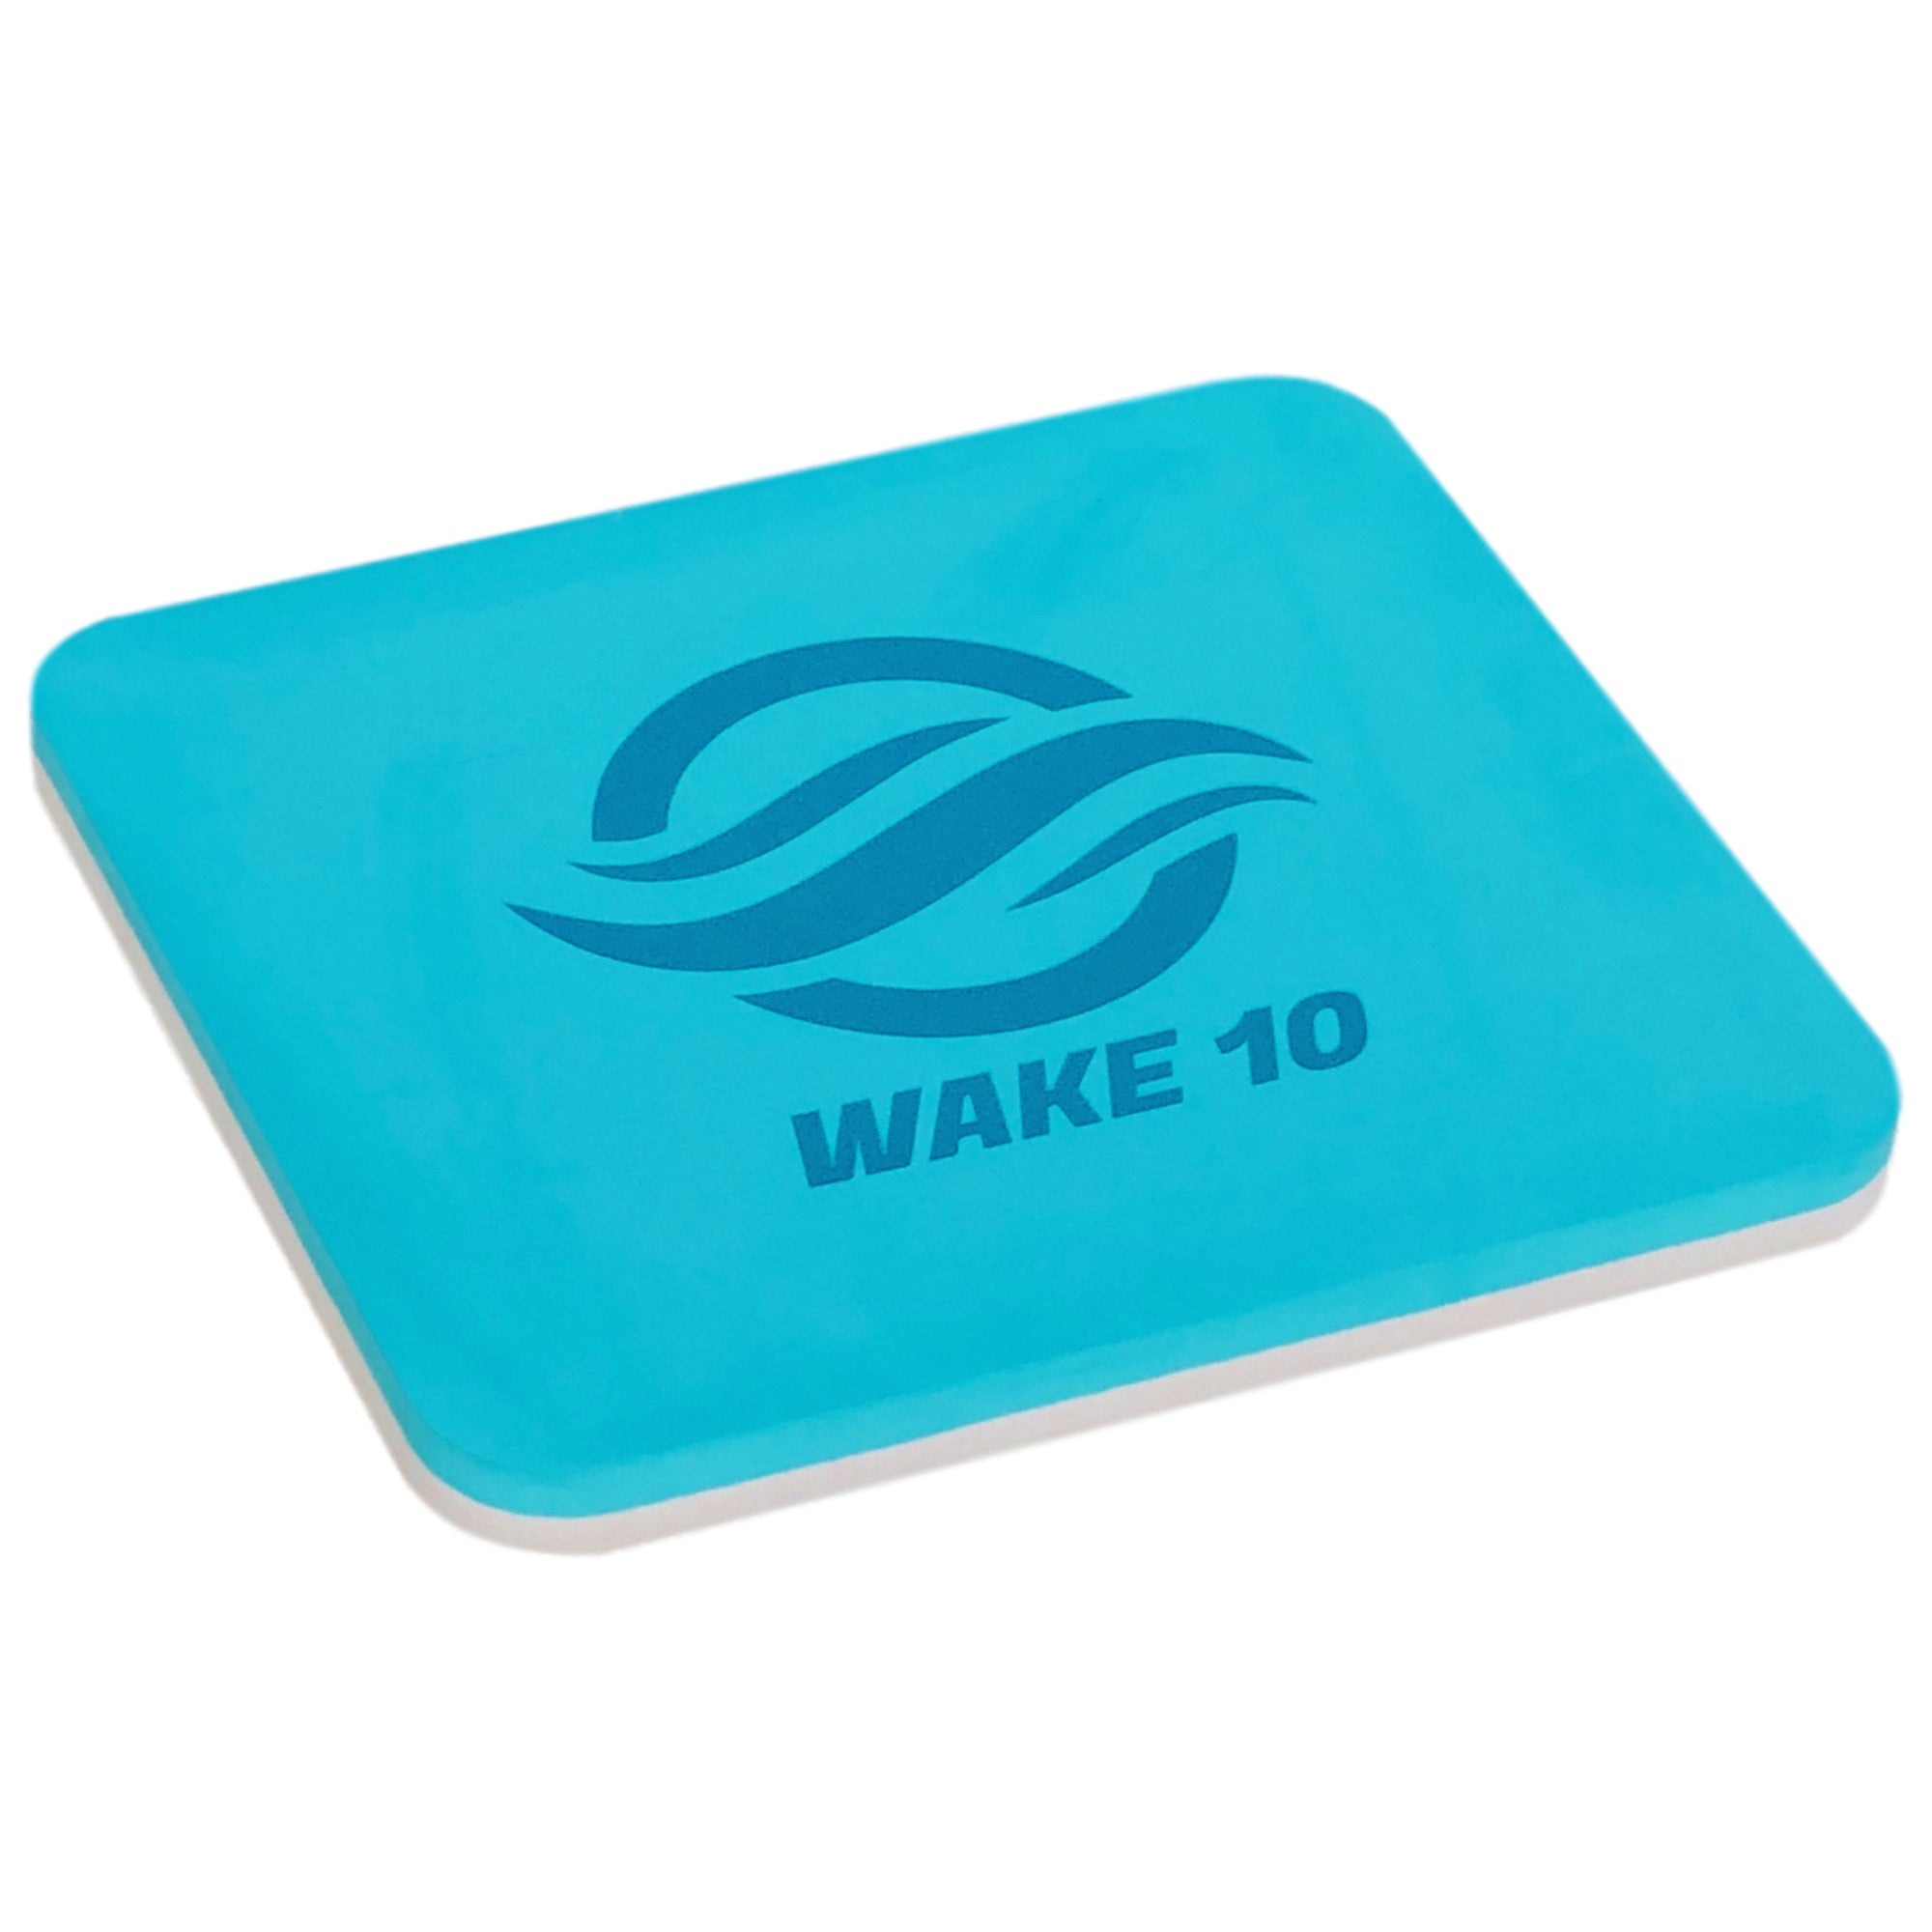 WAKE 10 Step Mat